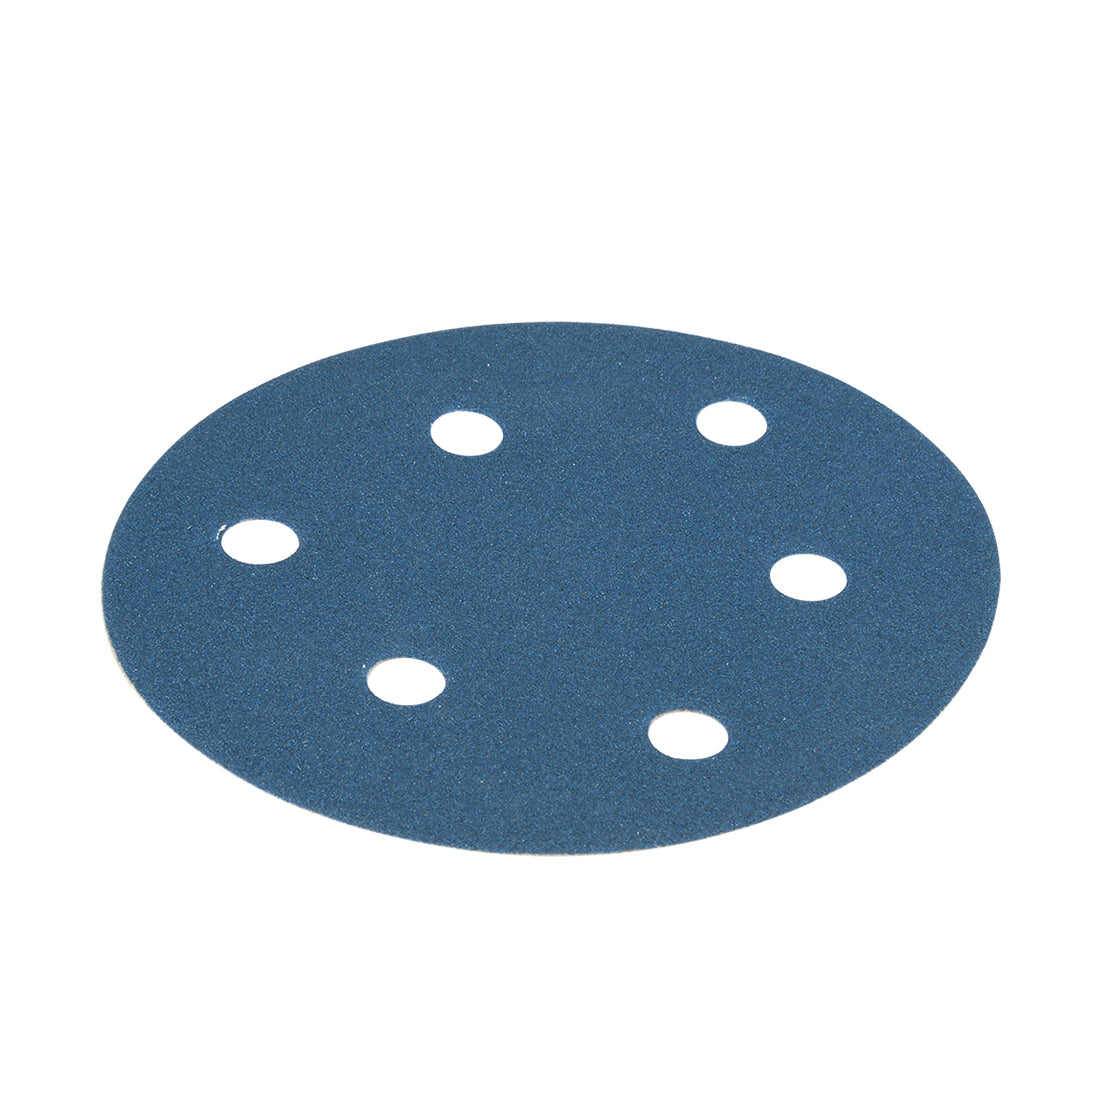 Uxcell Uxcell 10 Pcs 5 Inch 6 Hole Hook and Loop Sanding Disc 320 Grits Flocking Sandpaper Random Orbital Sander Paper Blue